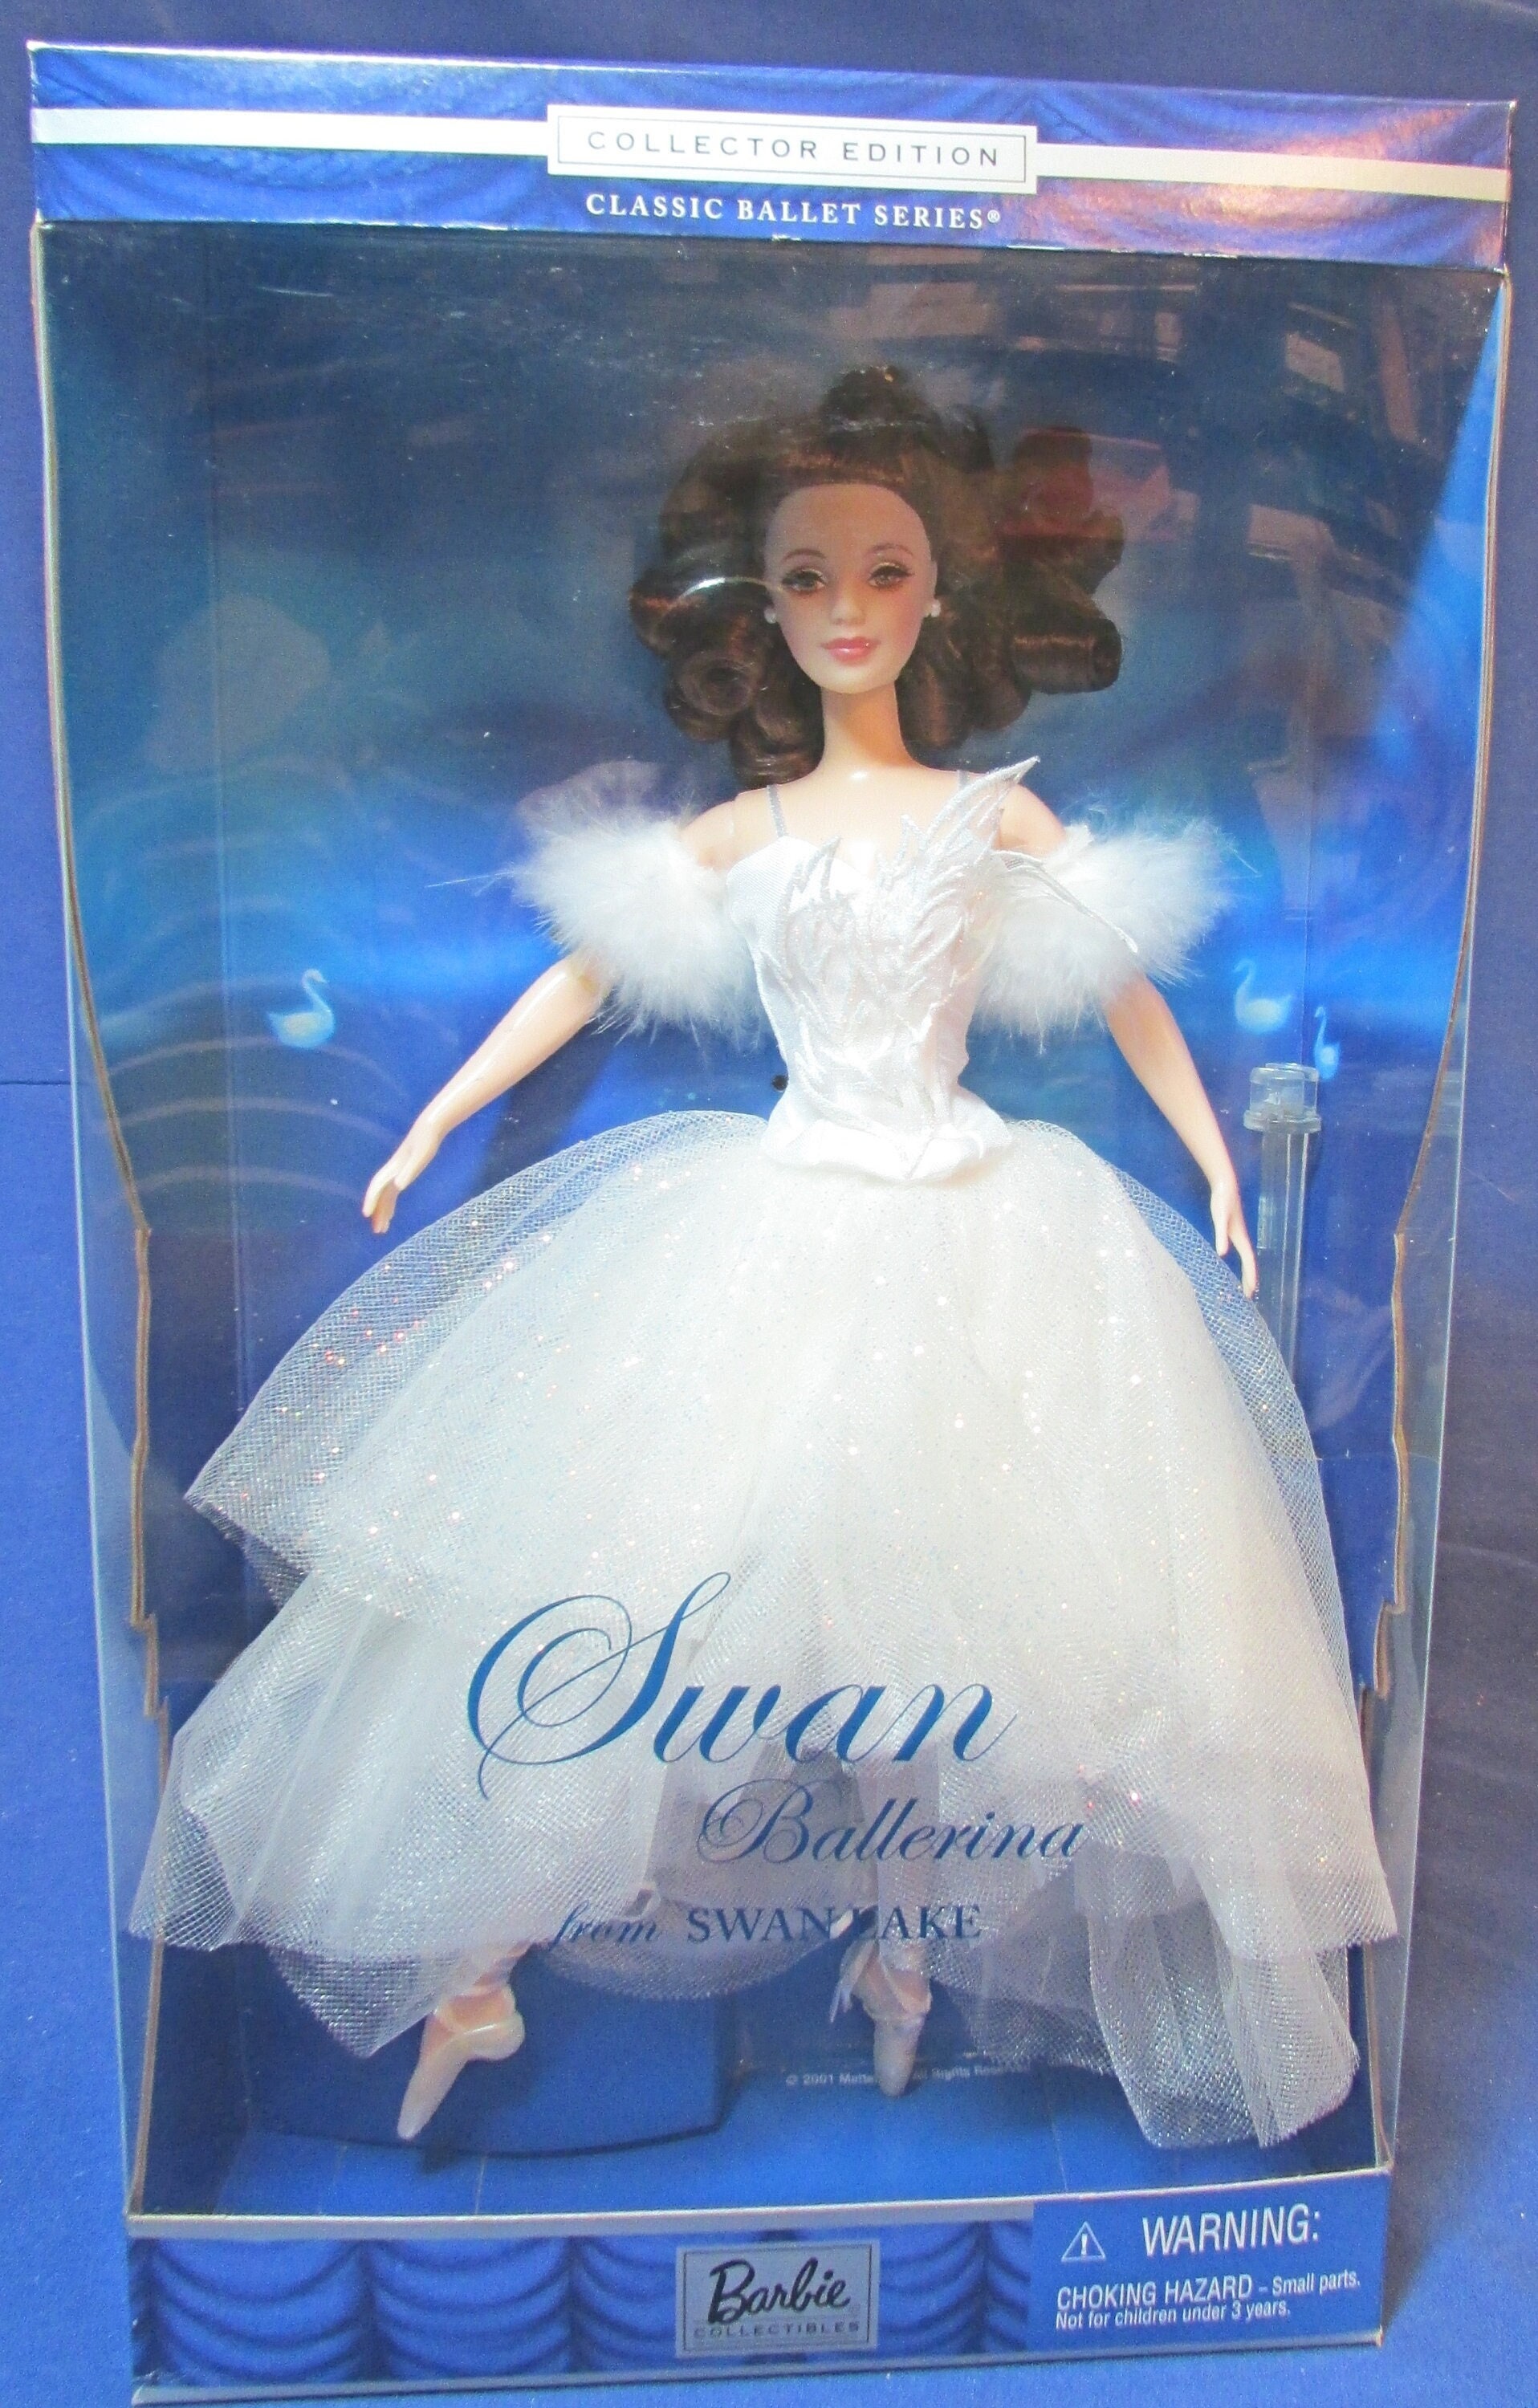 Swan Ballerina from Swan Lake 2002 Barbie Doll for sale online